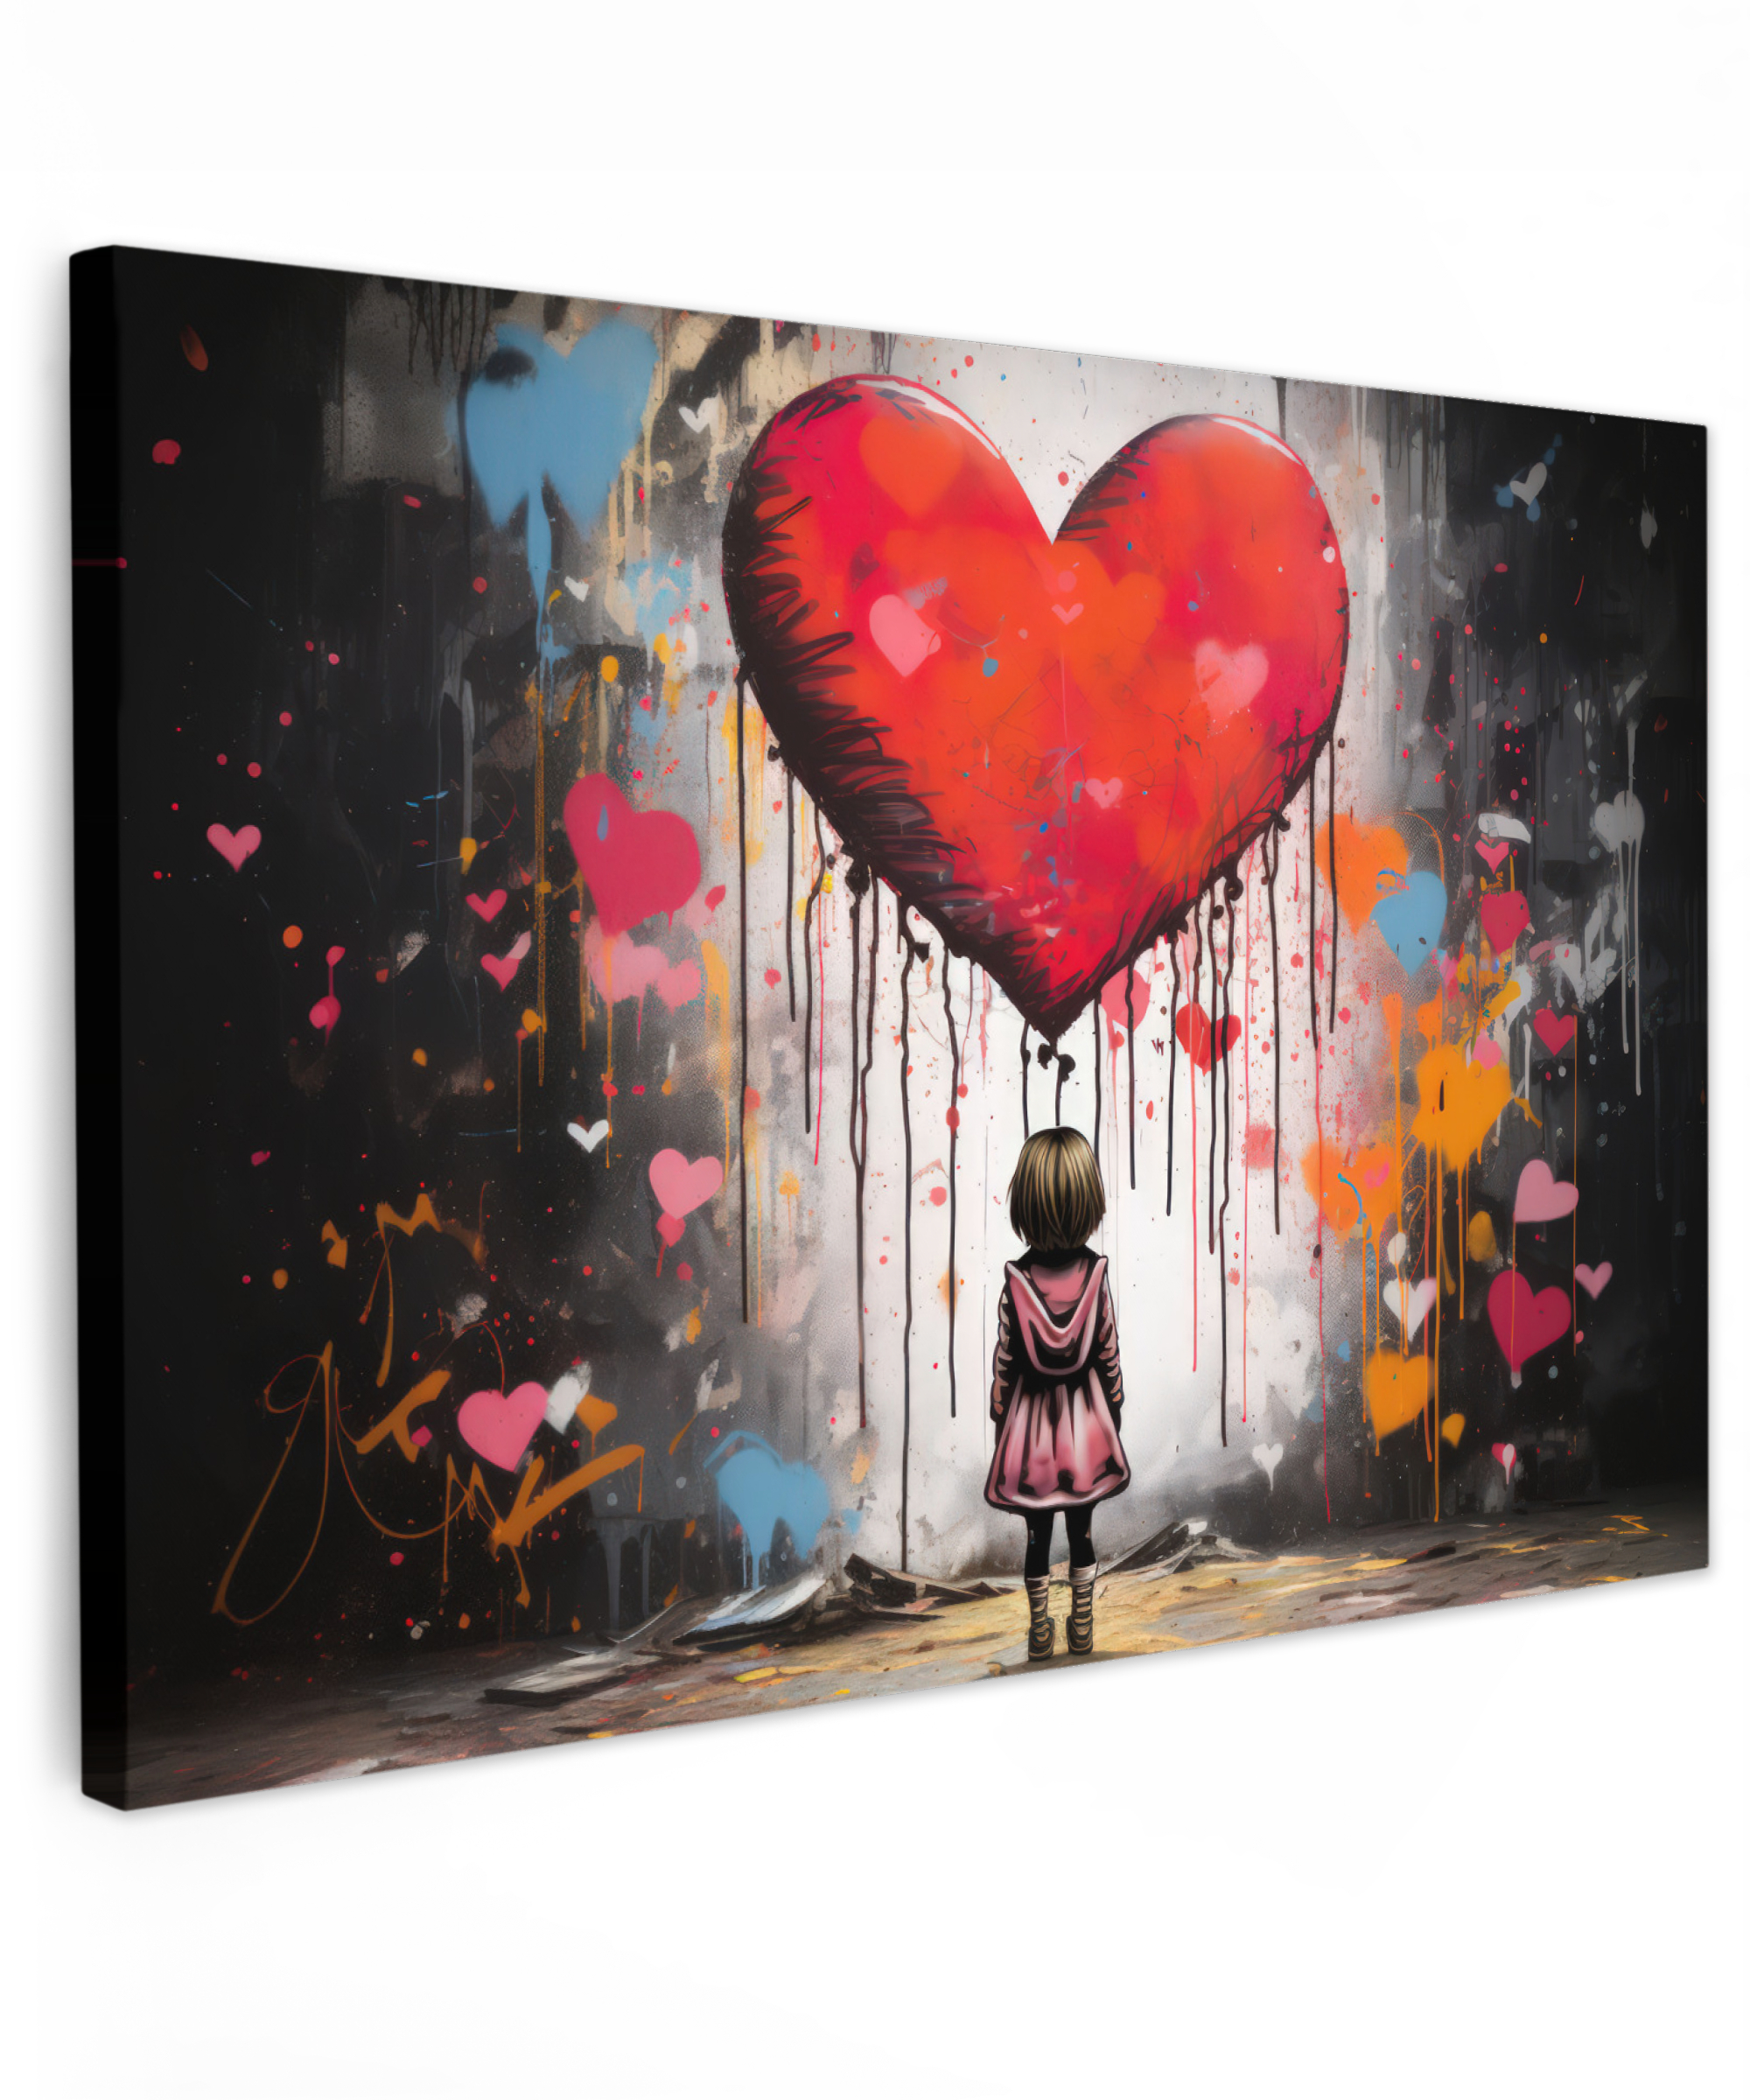 Leinwandbild - Mädchen - Herz - Graffiti - Kunst - Farben - Rot